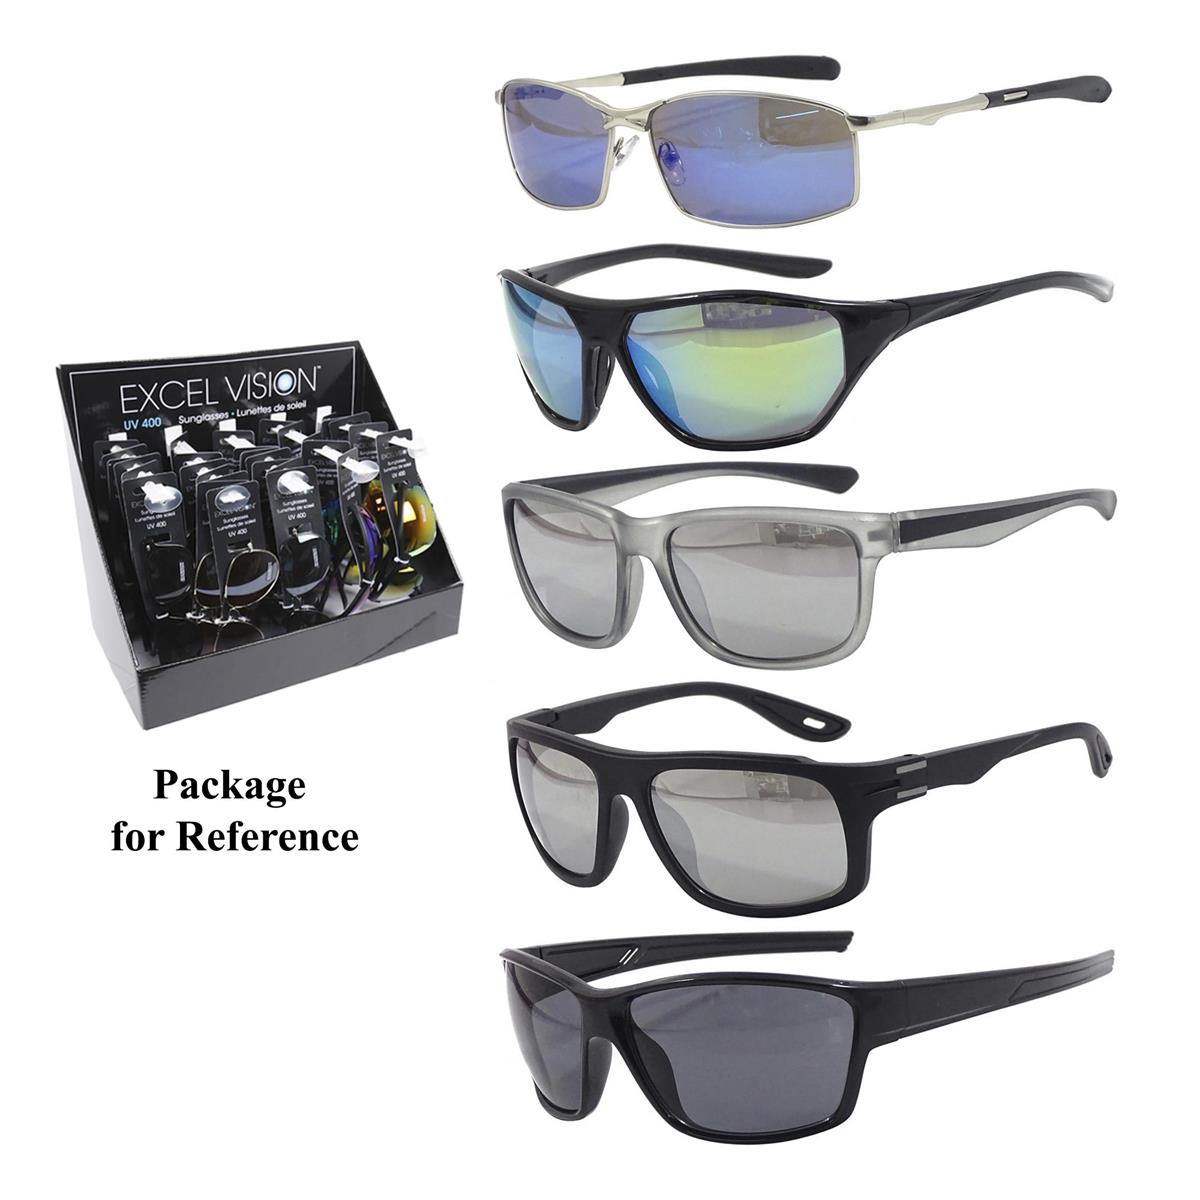 Excel Vision Men's Sunglasses - Mr FLY